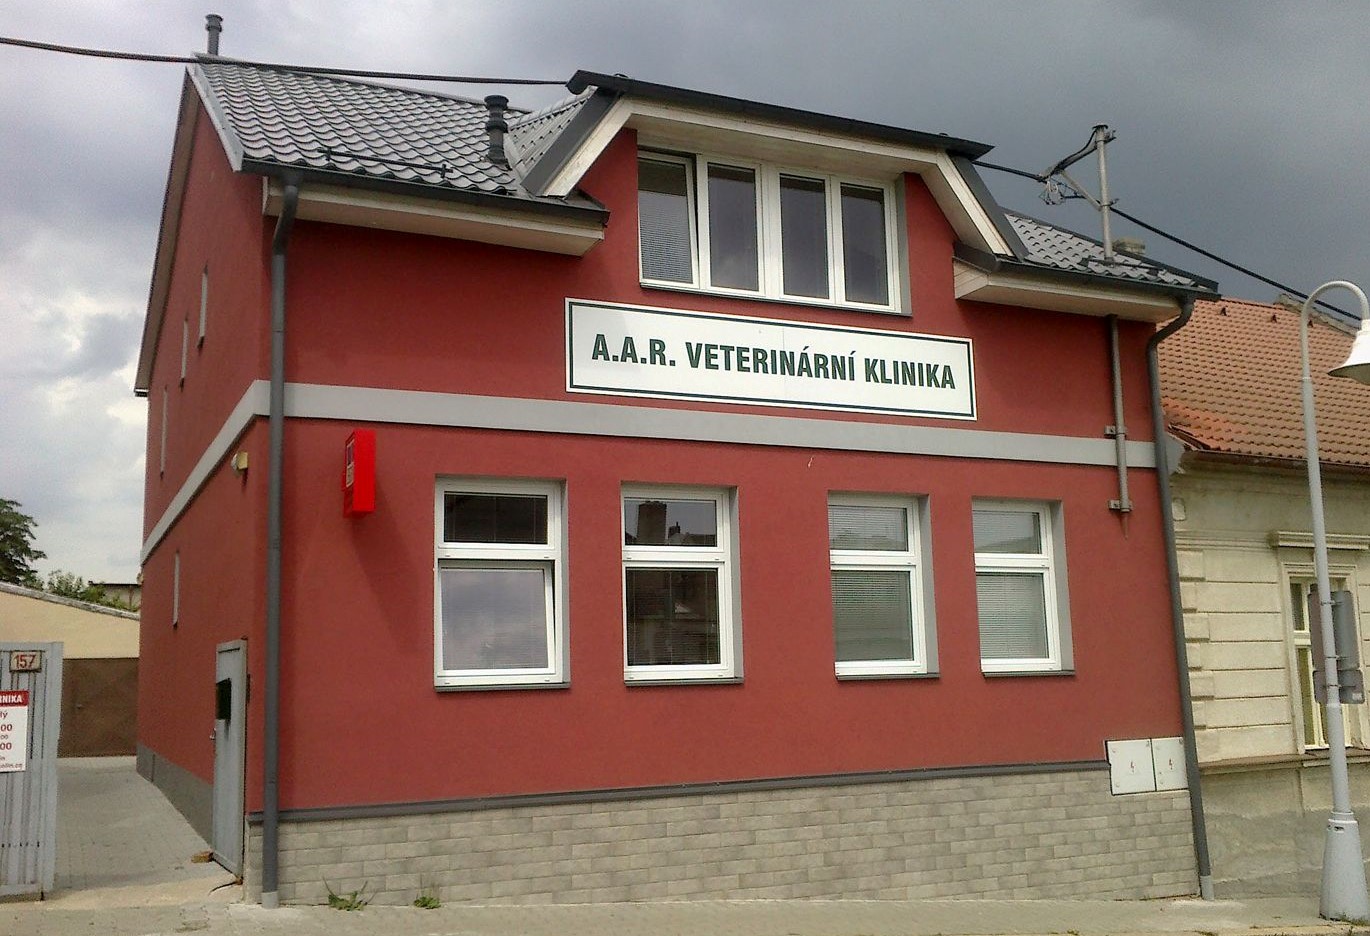 Veterinární klinika A.A.R.